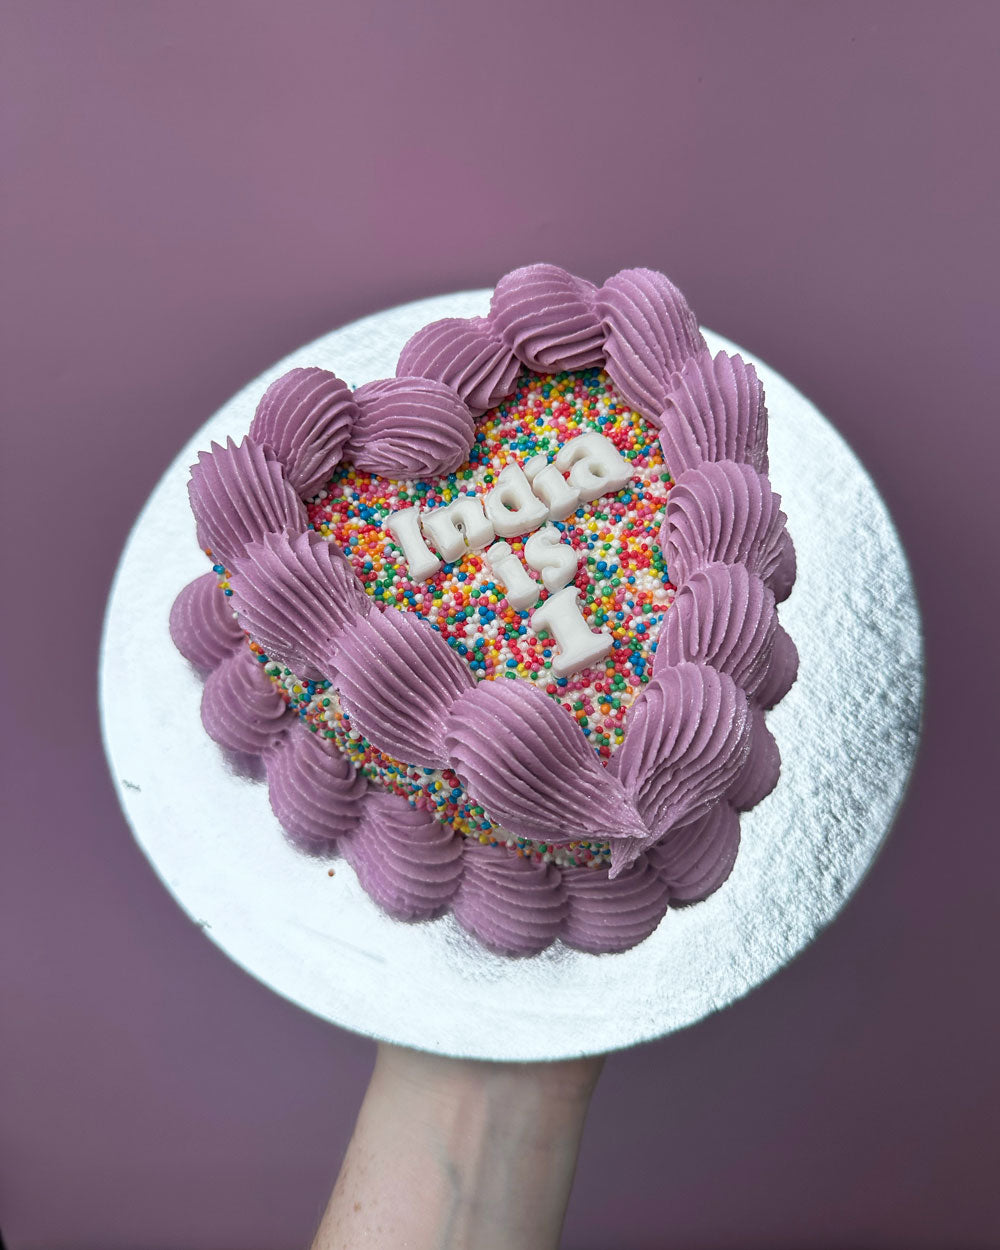 Mini Sprinkles Heart Cake